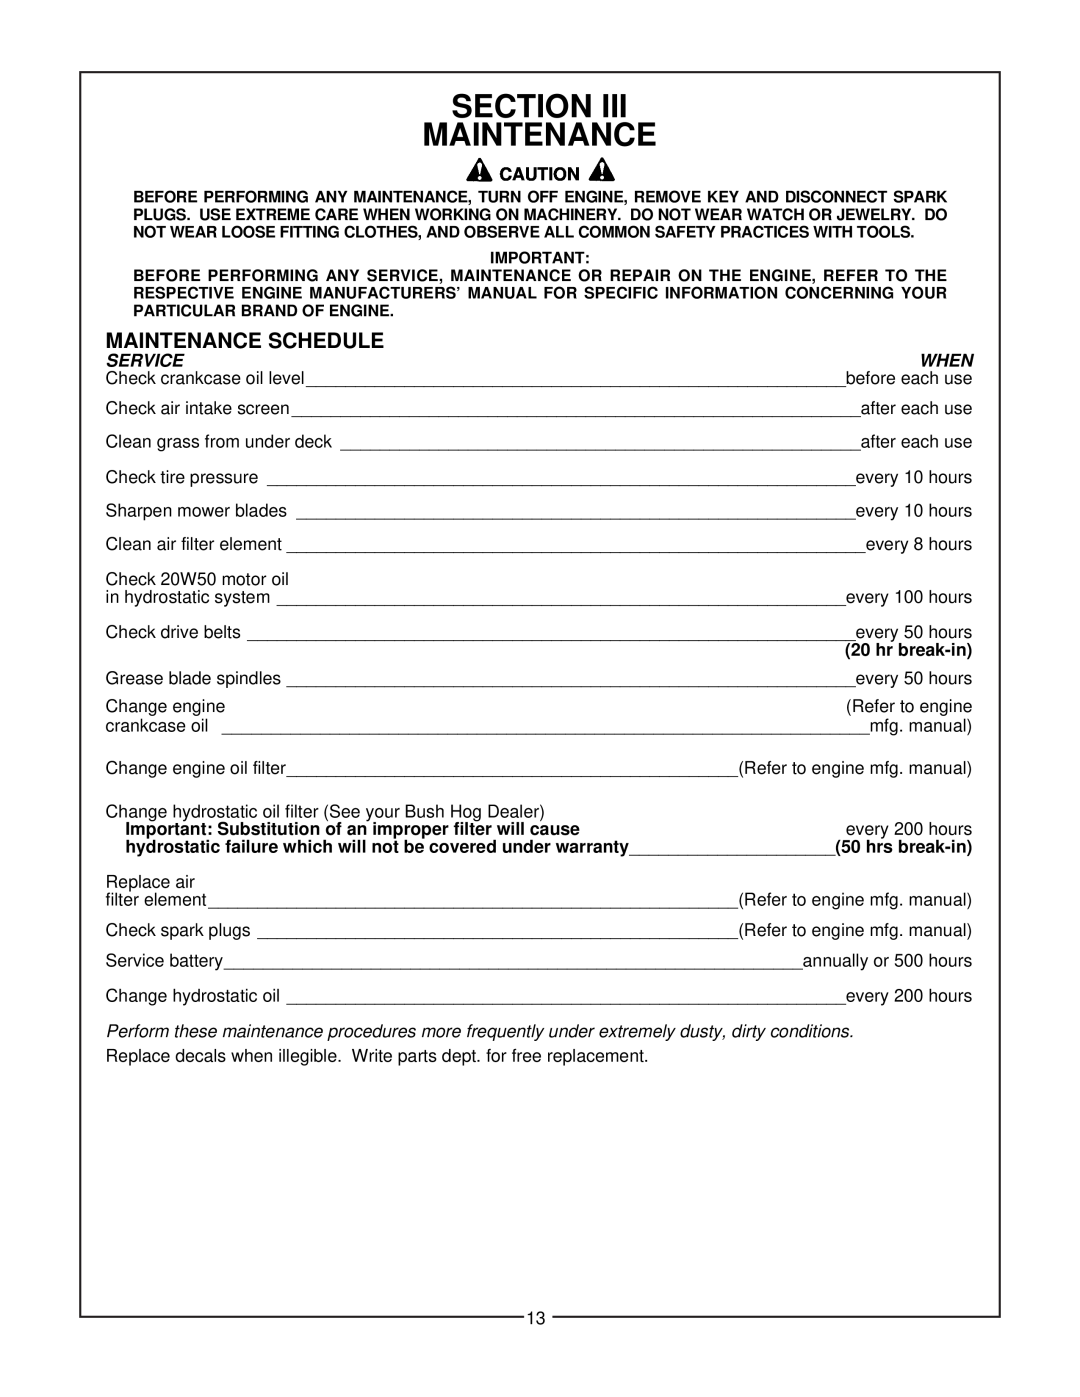 Bush Hog Estate Series manual Section Maintenance, Maintenance Schedule, Servicewhen 